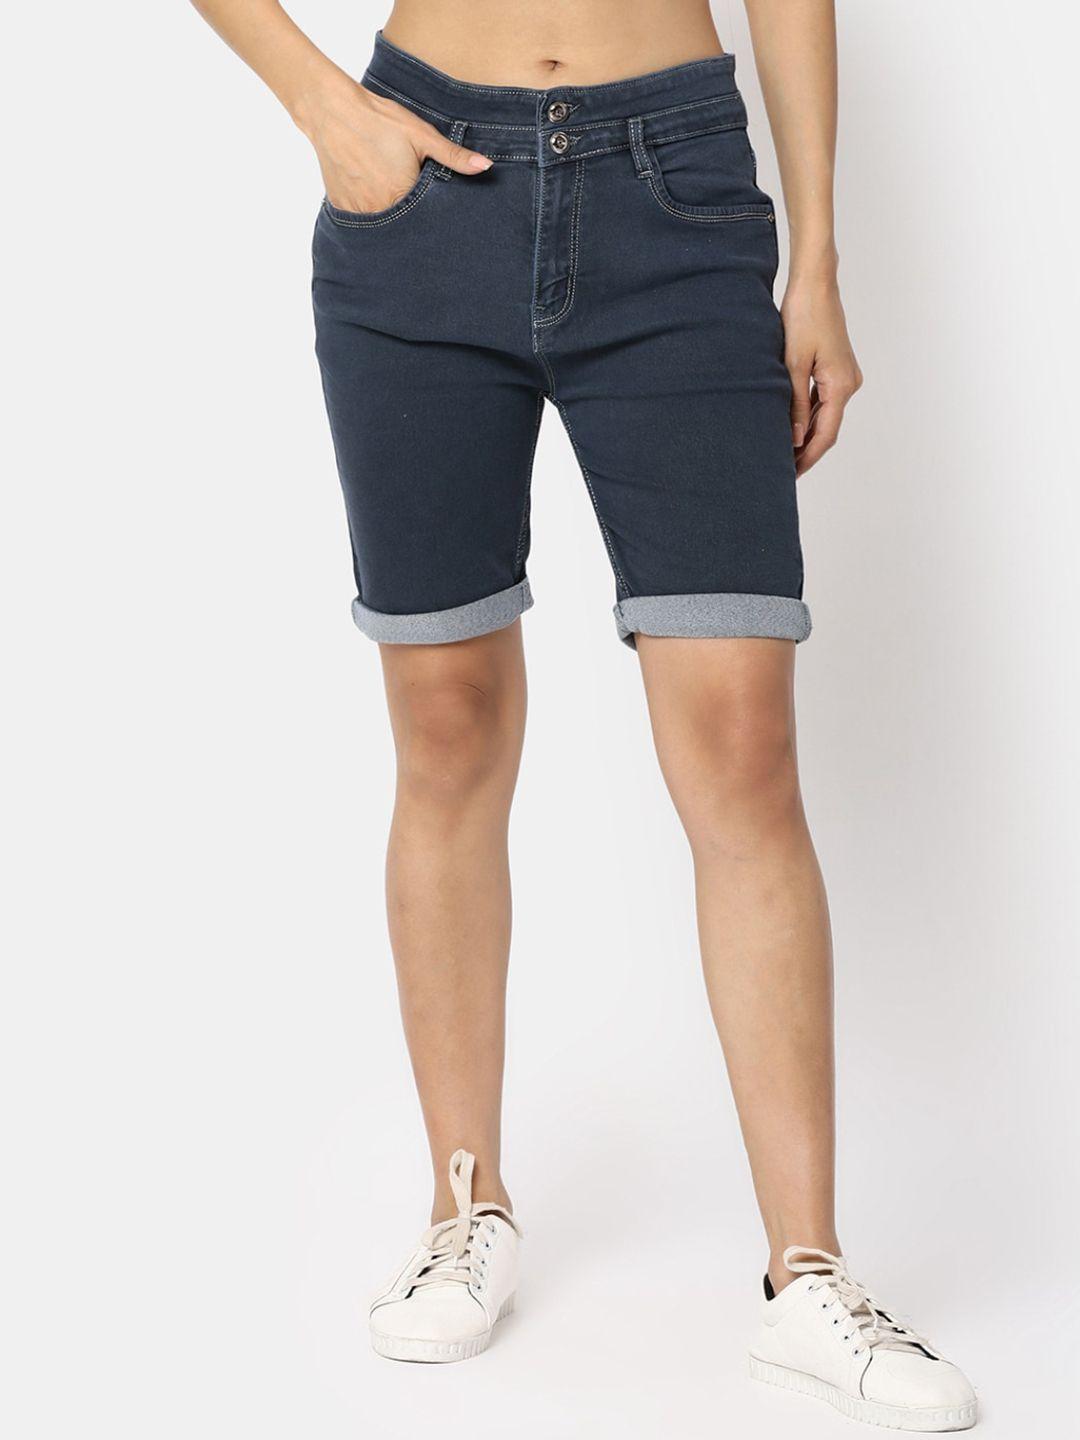 v-mart women mid-rise cotton denim shorts